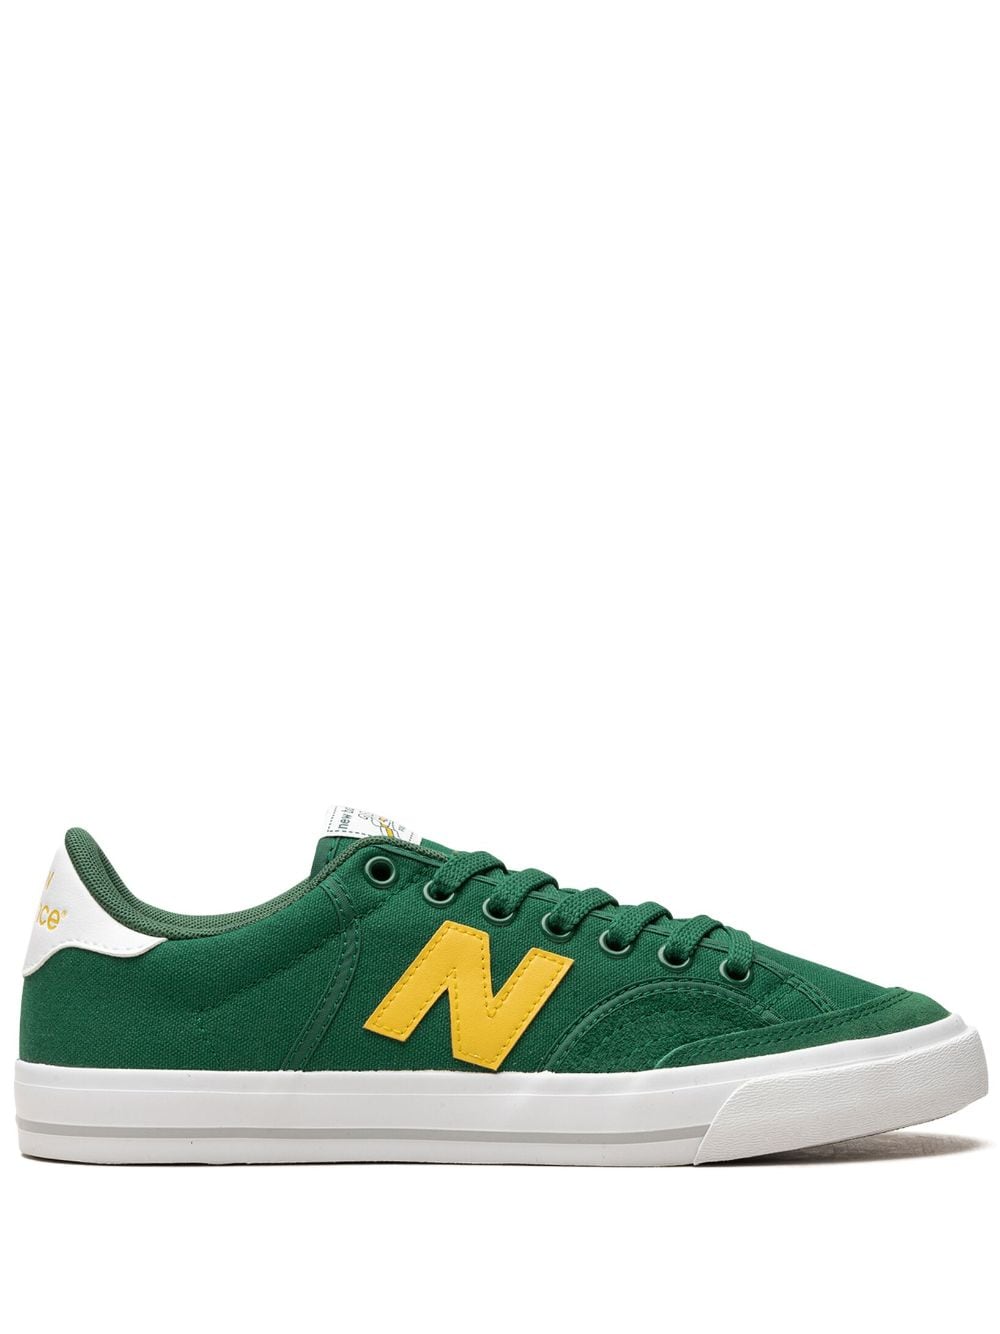 New Balance Numeric 212 Pro Court "Green/Yellow" sneakers von New Balance